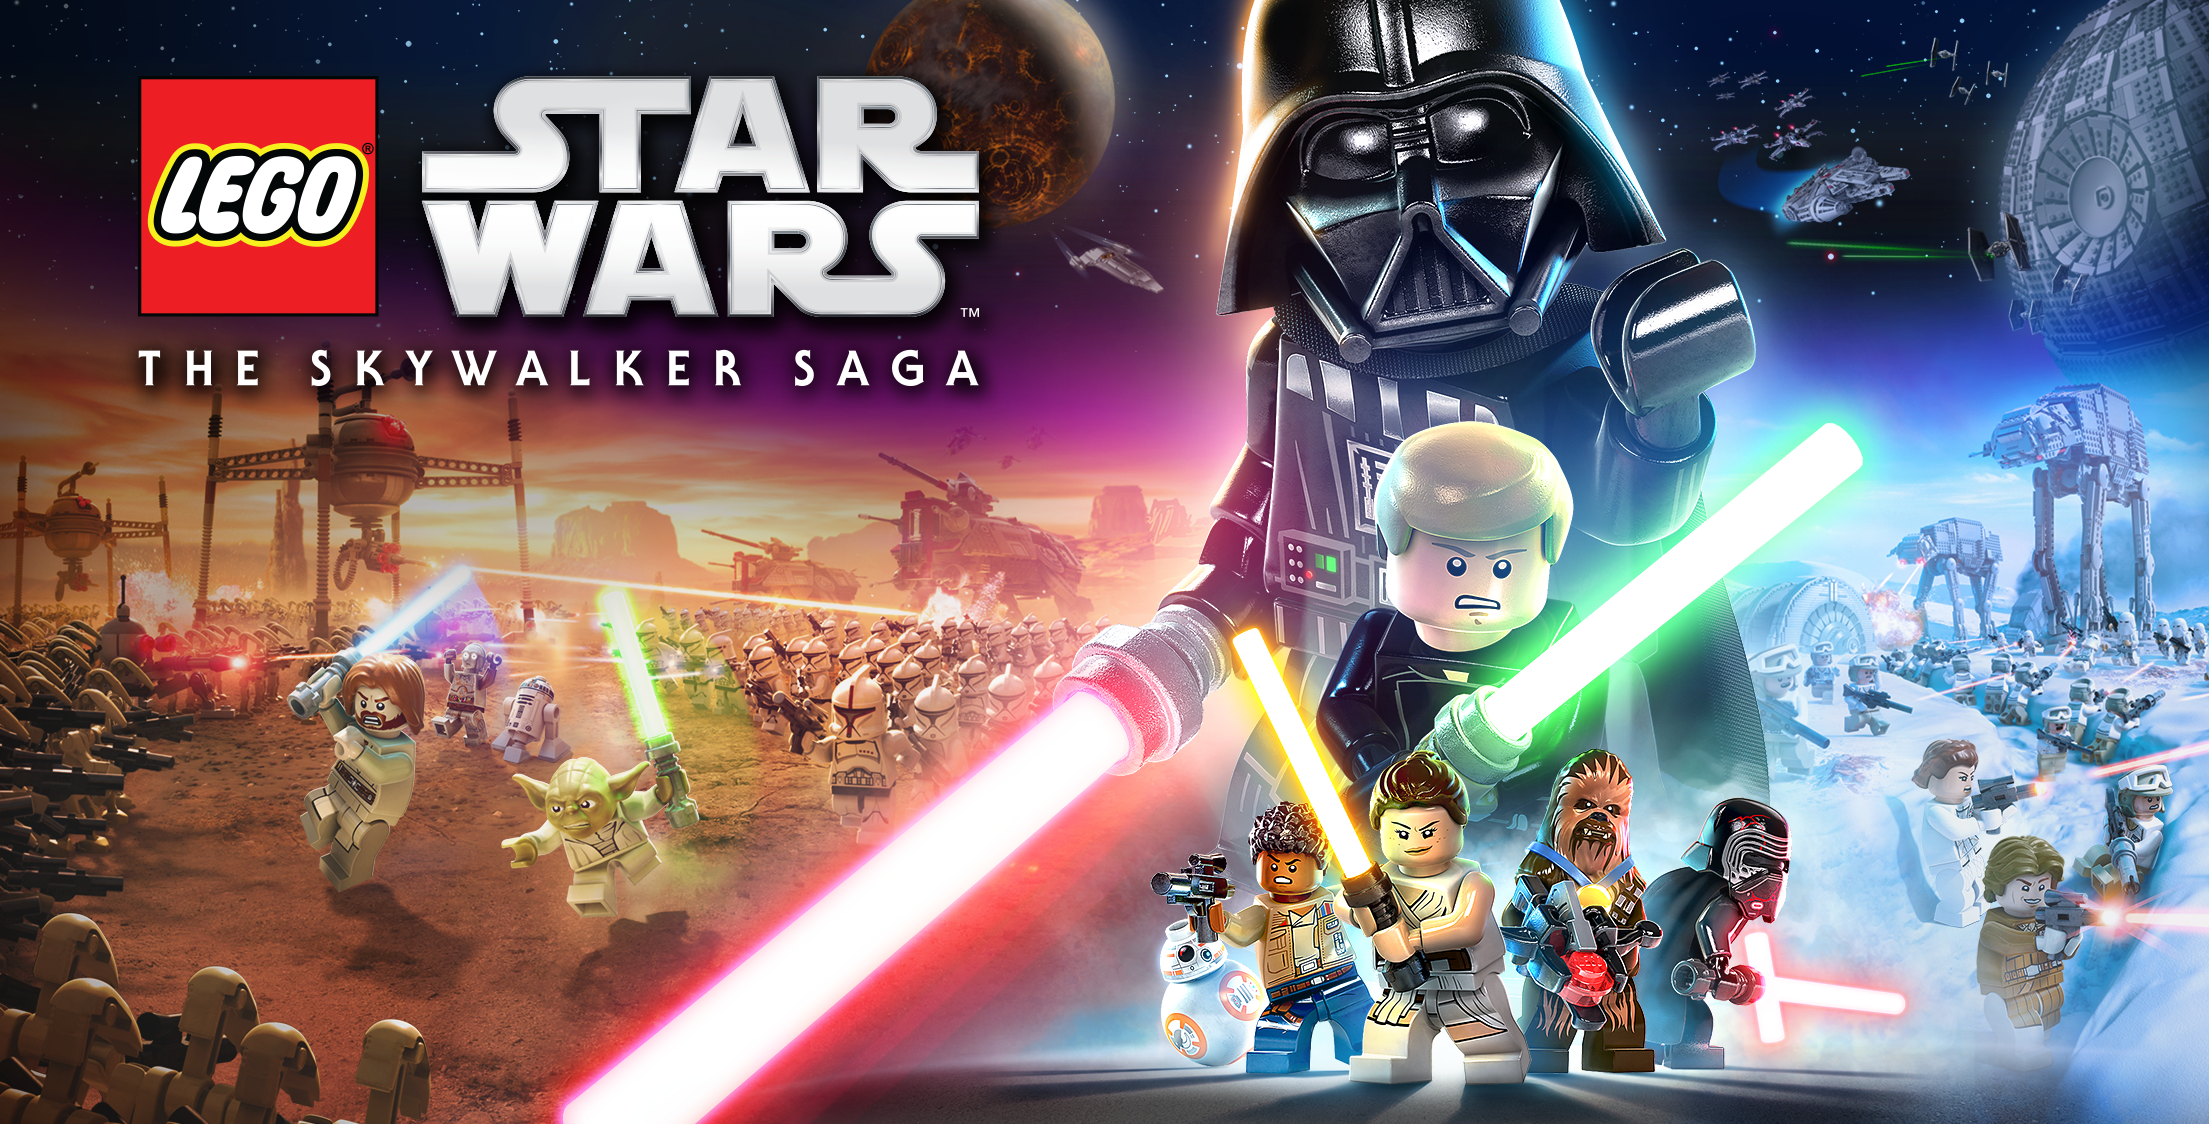 Official key art for LEGO Star Wars: The Skywalker Saga